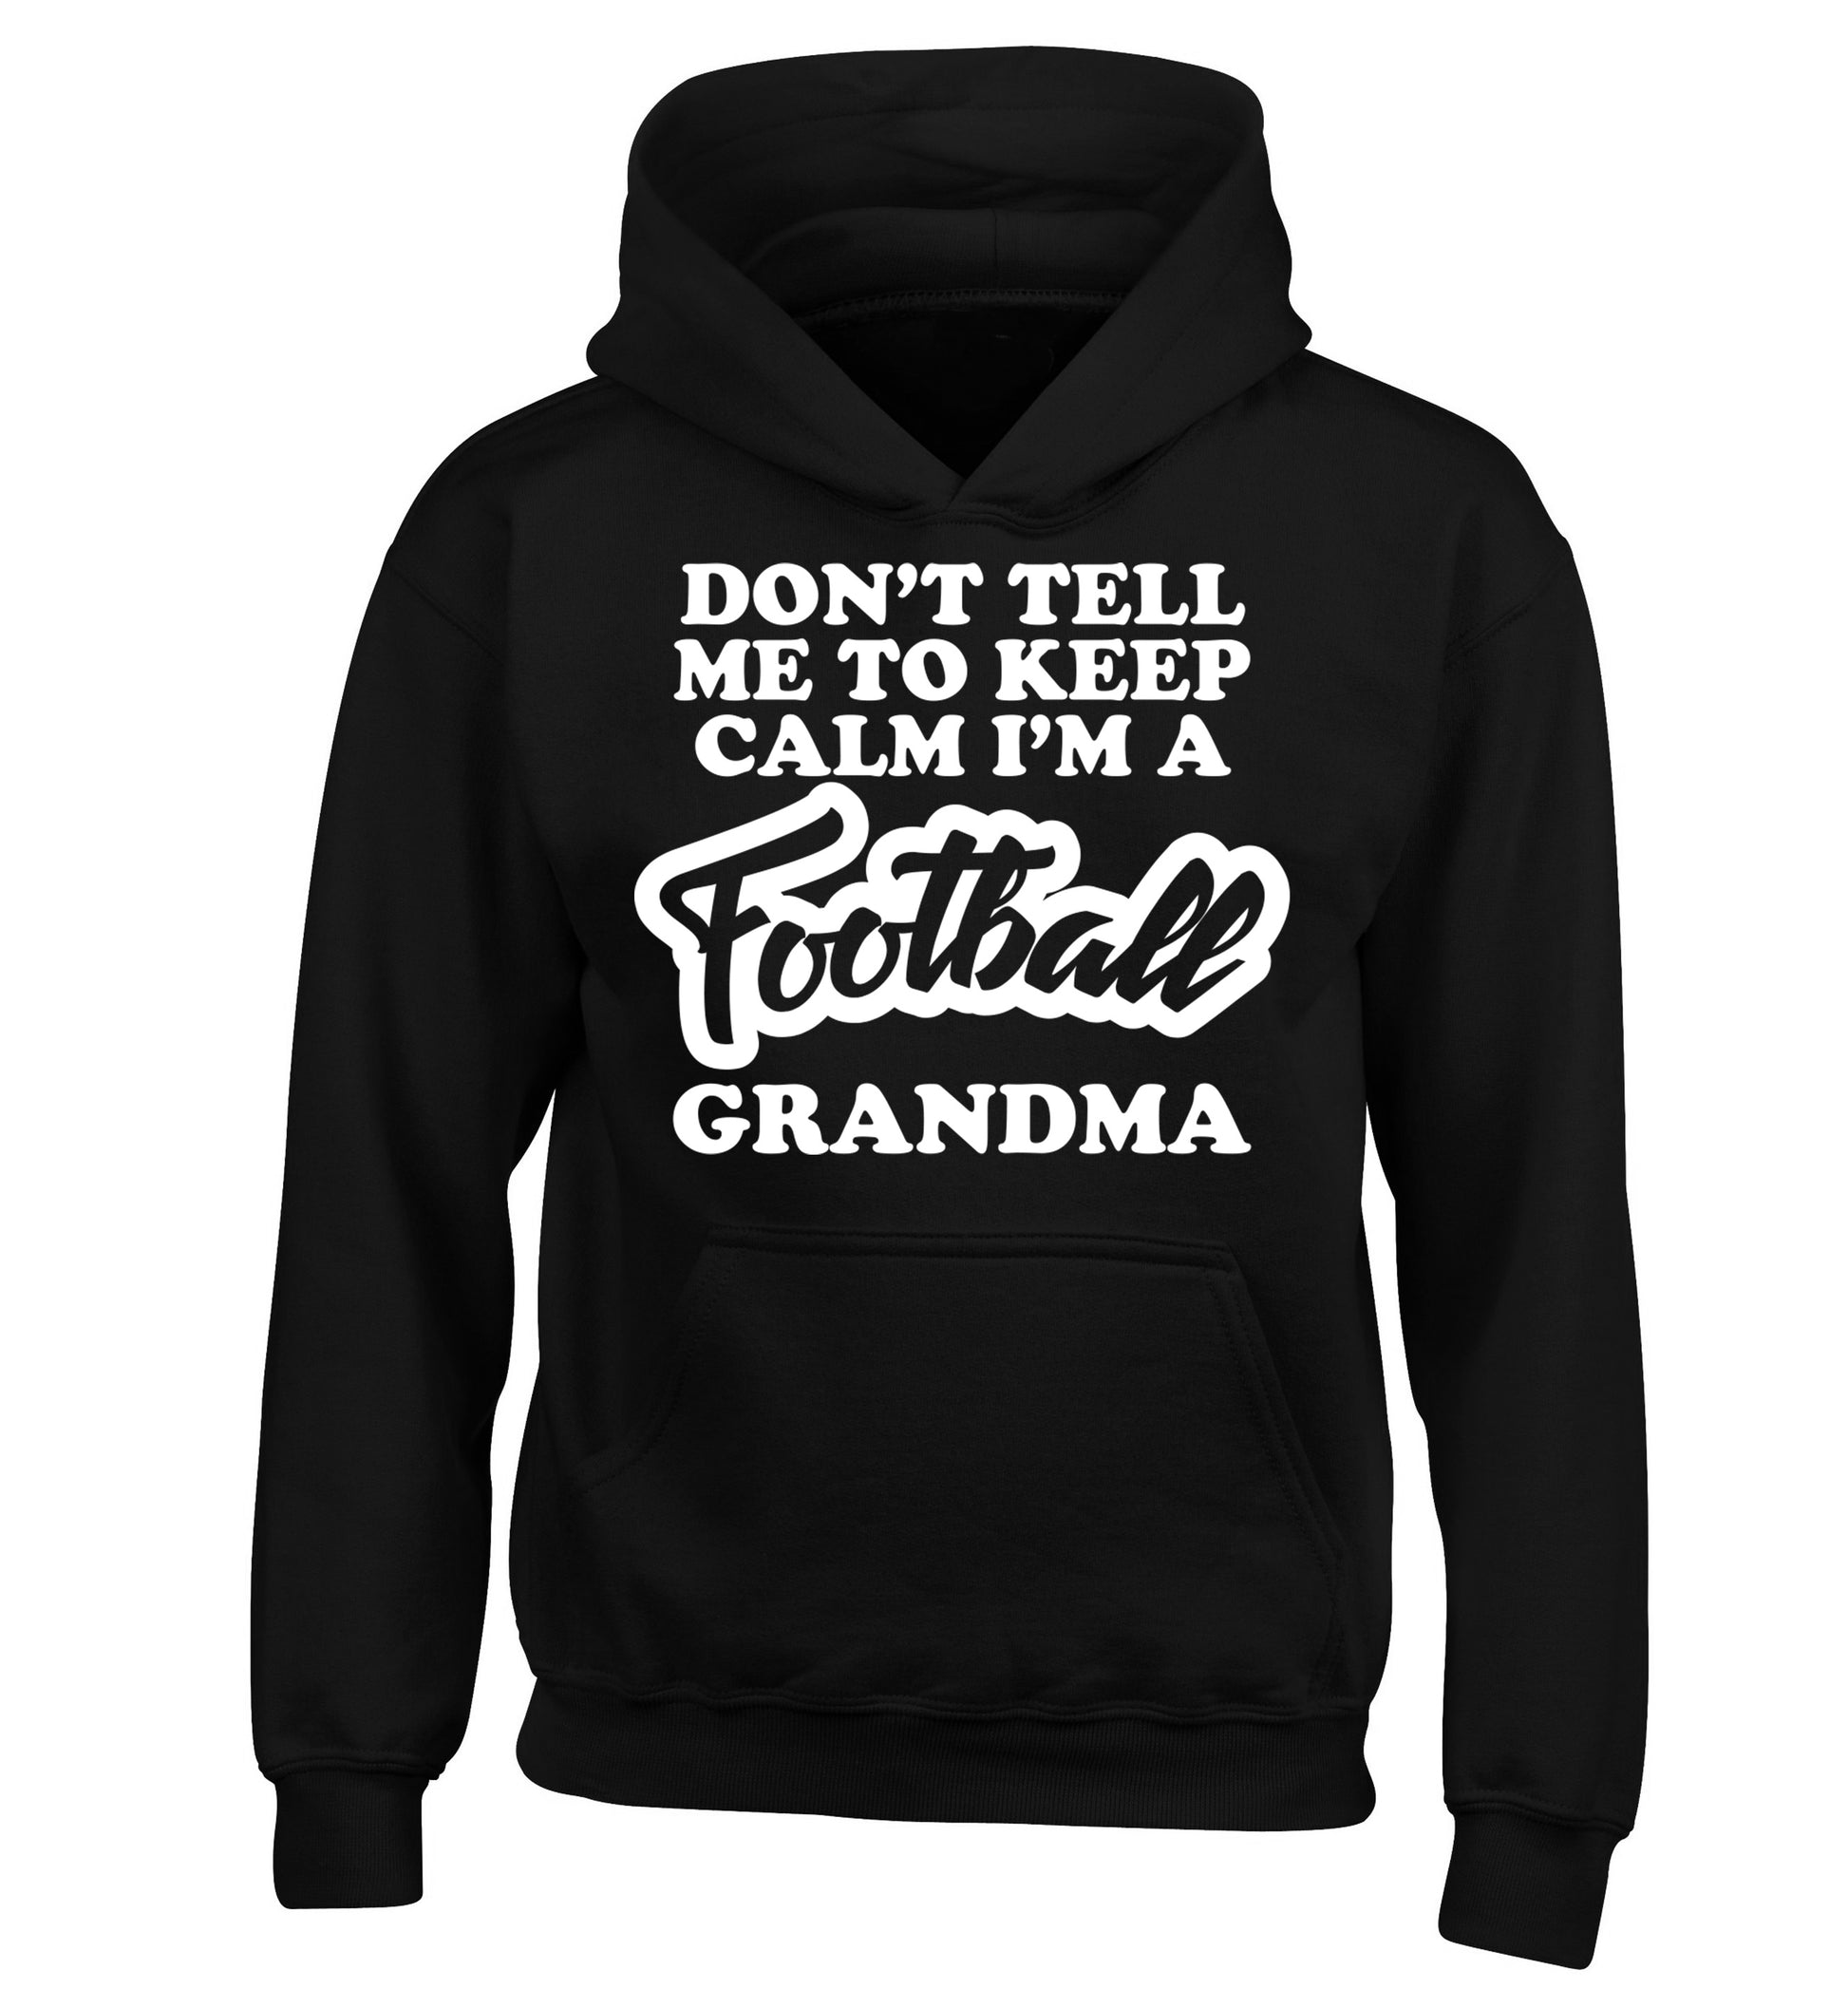 Don't tell me to keep calm I'm a football grandma children's black hoodie 12-14 Years